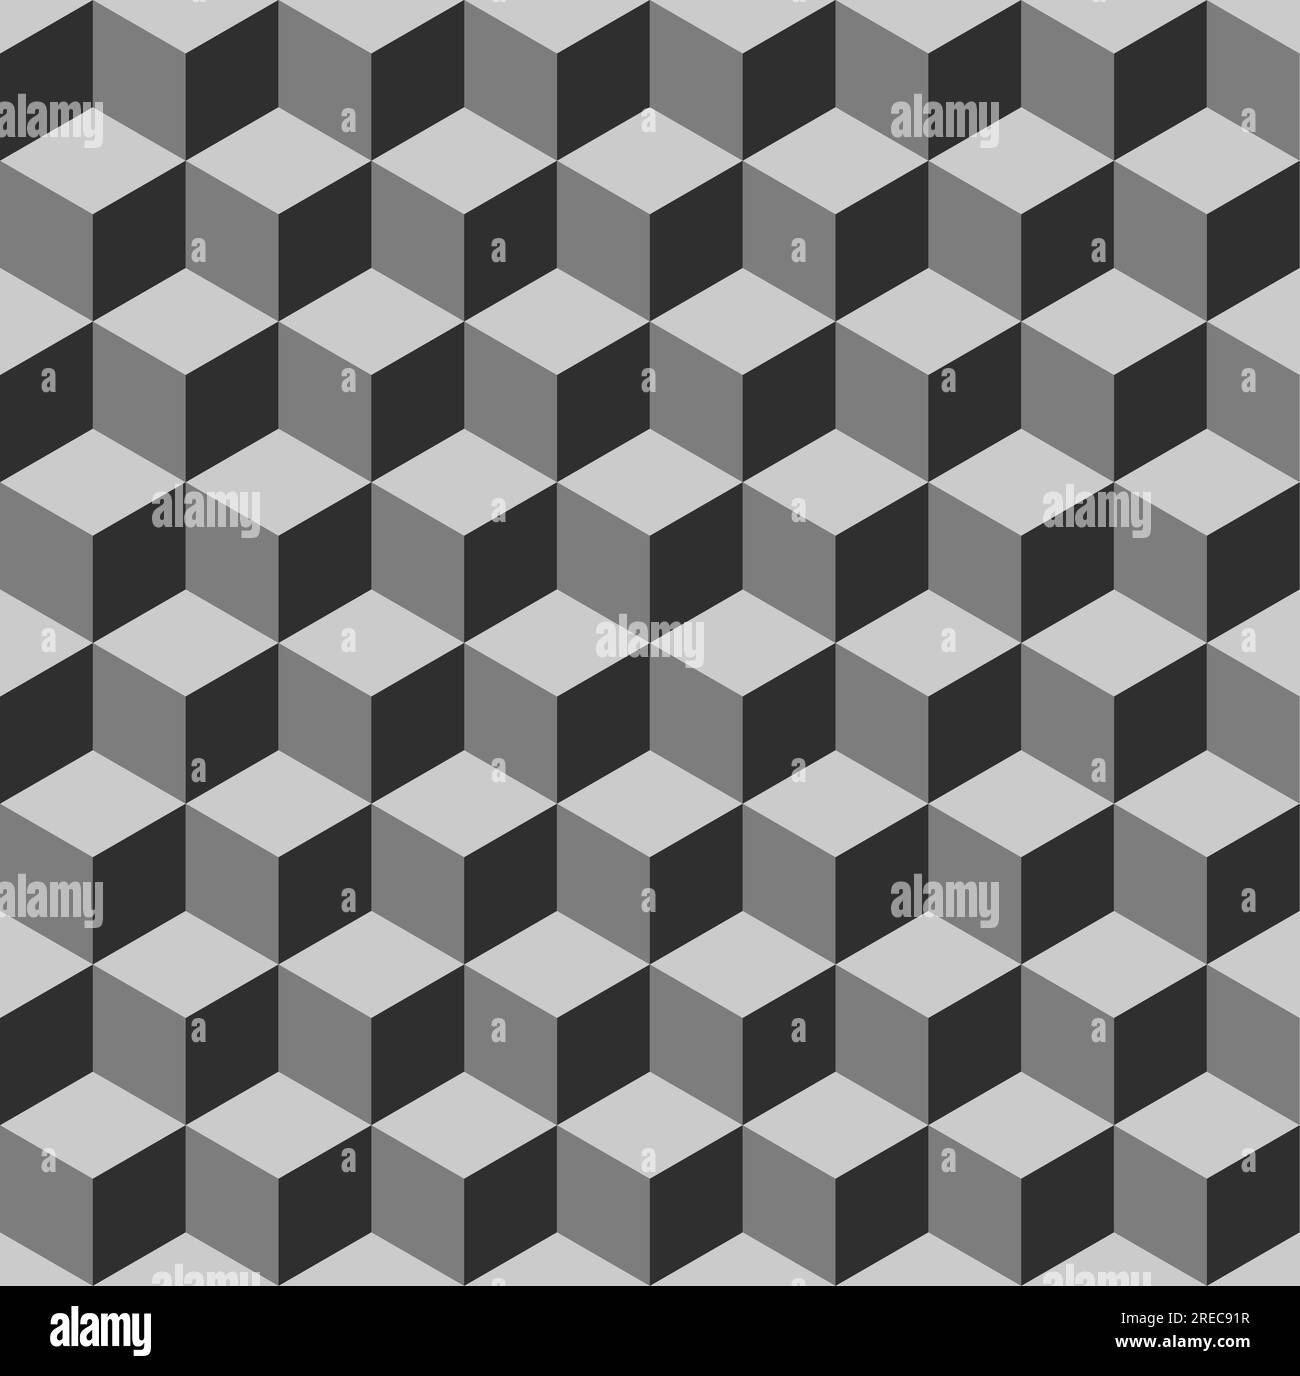 Abstract cube pattern. 3D optical illusion tumbling blocks hexagon tiles. Cuboid seamless tiles pattern. Vector illustration. Stock Vector